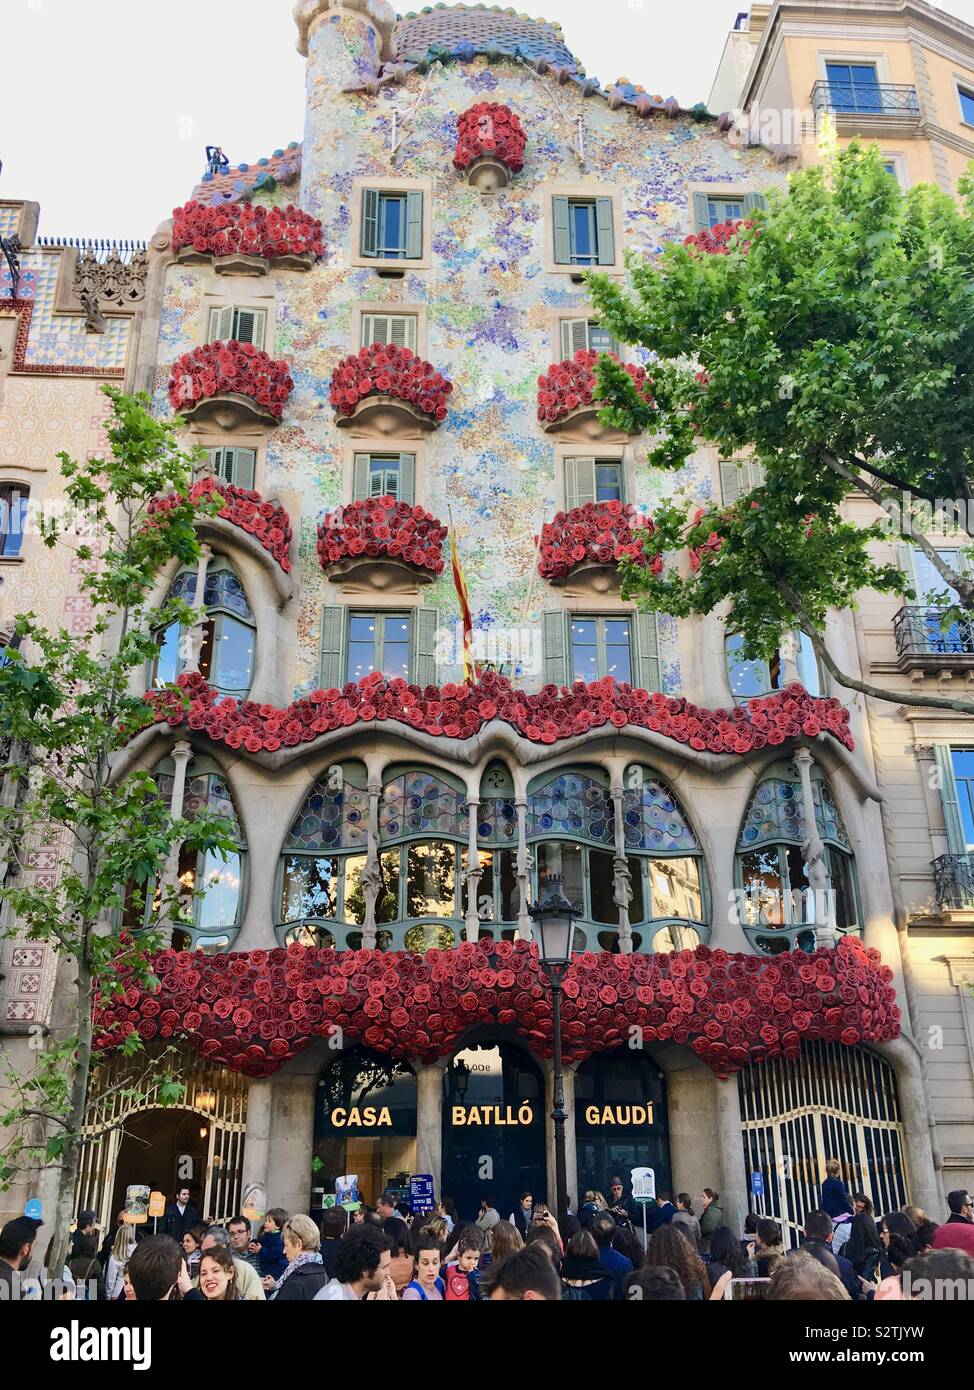 Anton Gaudi’s Casa Batllo decorated with red roses for Saint Jordi day Stock Photo